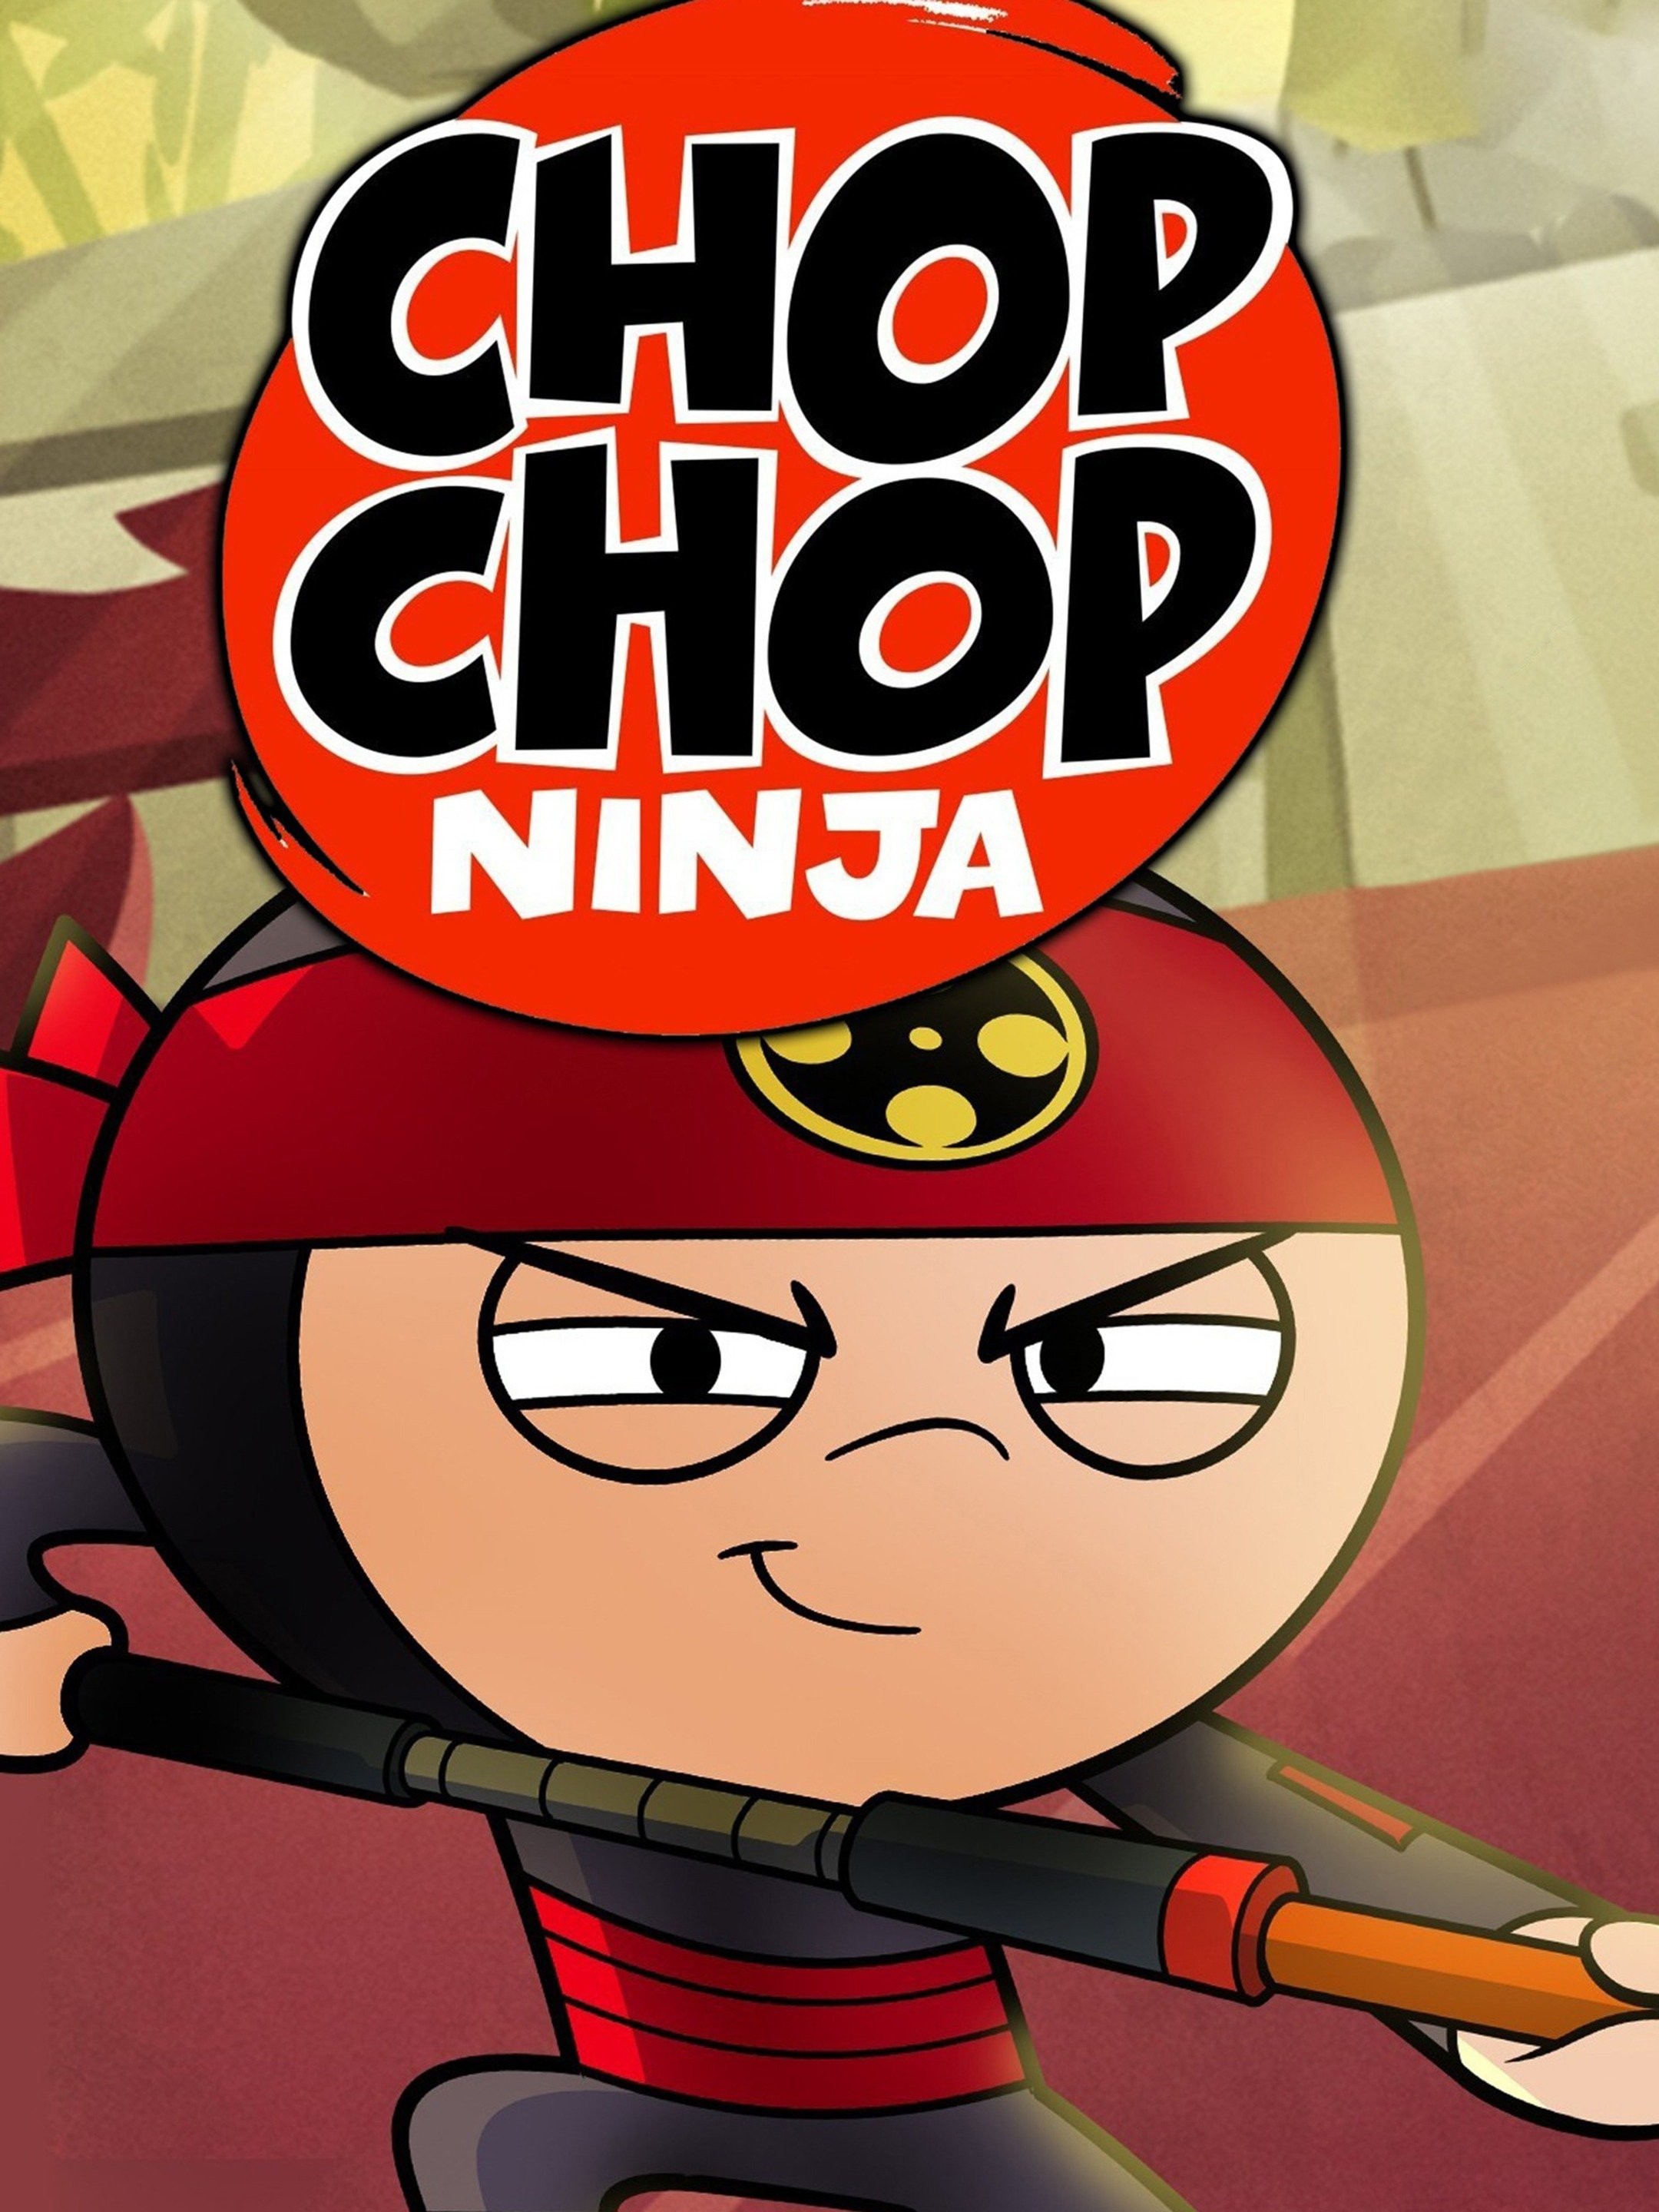 Chop Chop Ninja (TV series)